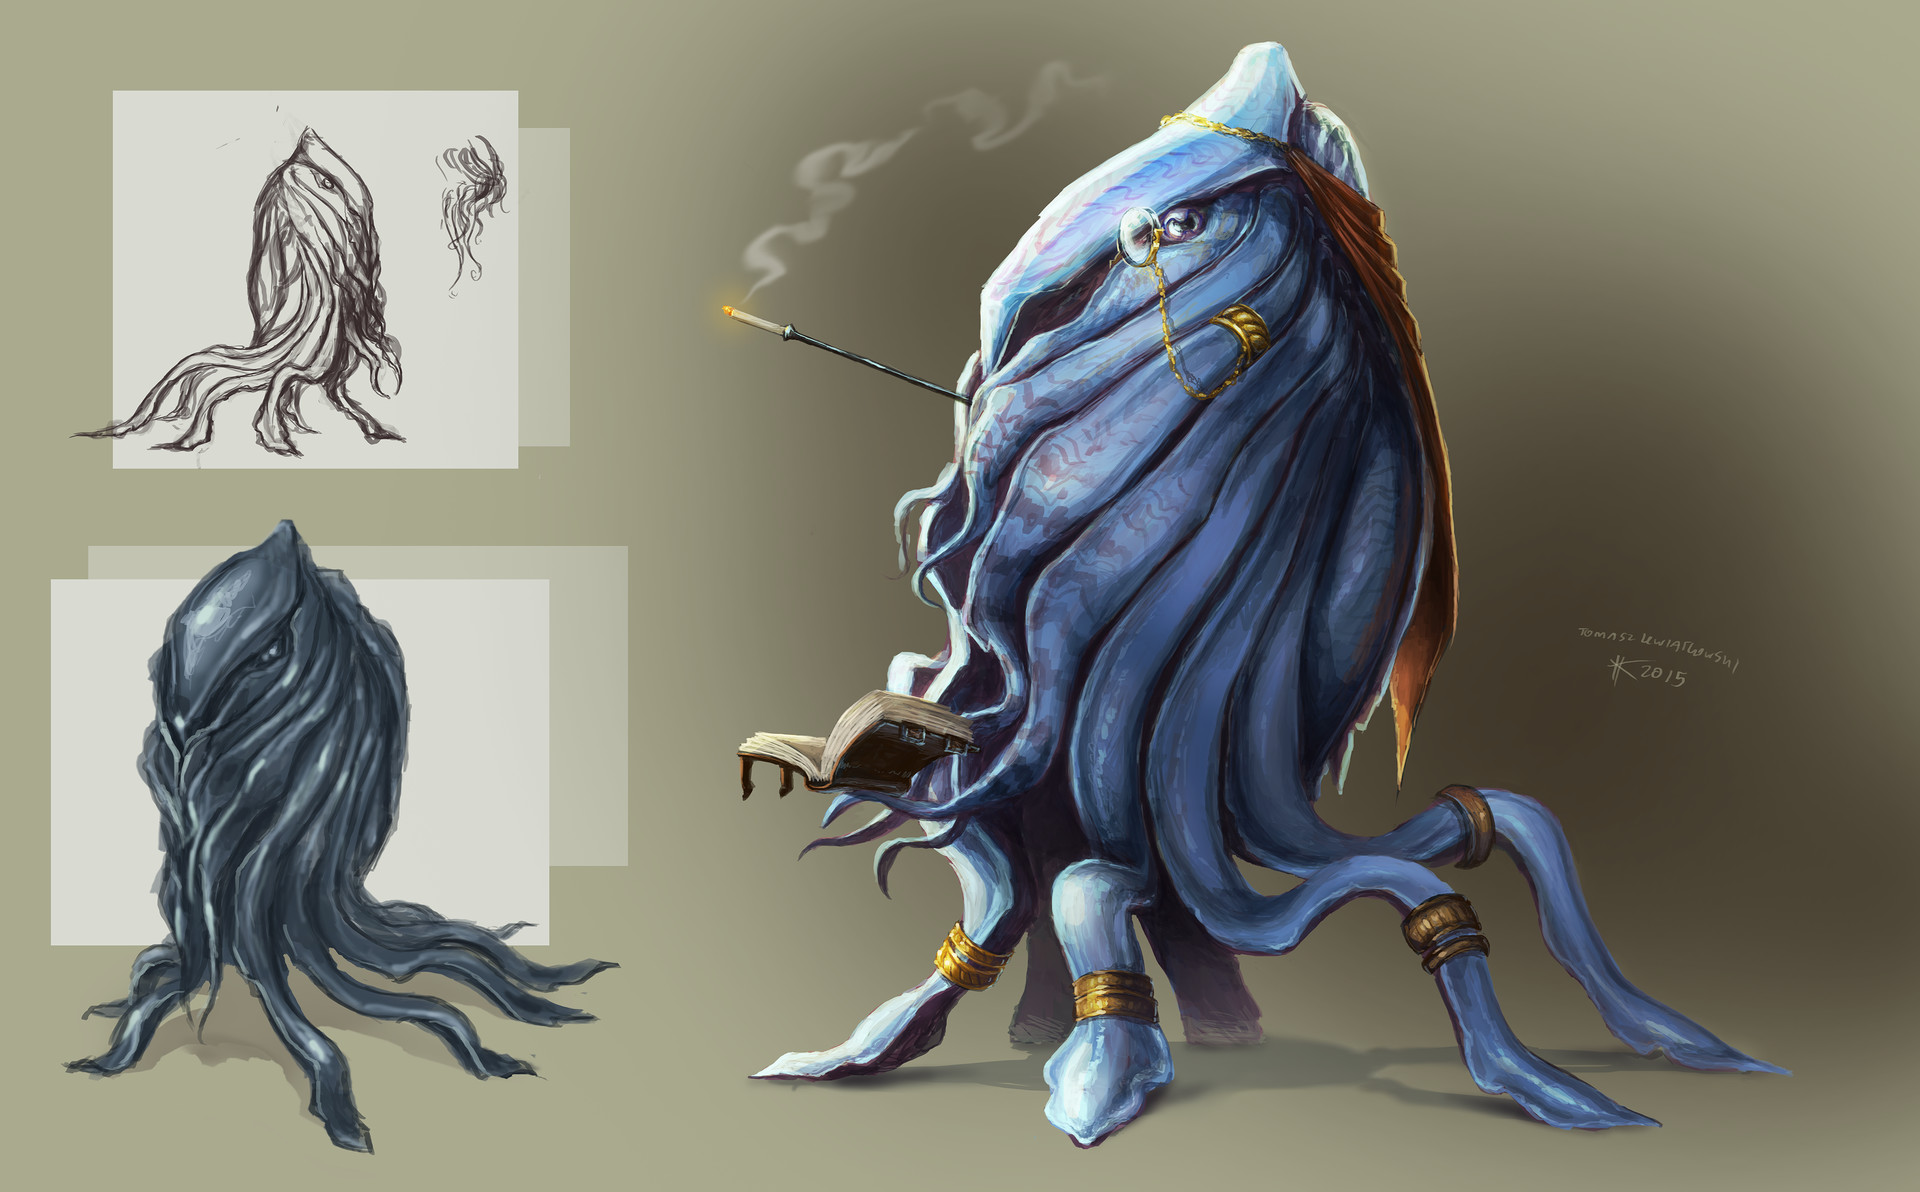 Creatures of sonaria monster kaiju animal. Фэнтези существа. Концепт персонажа.